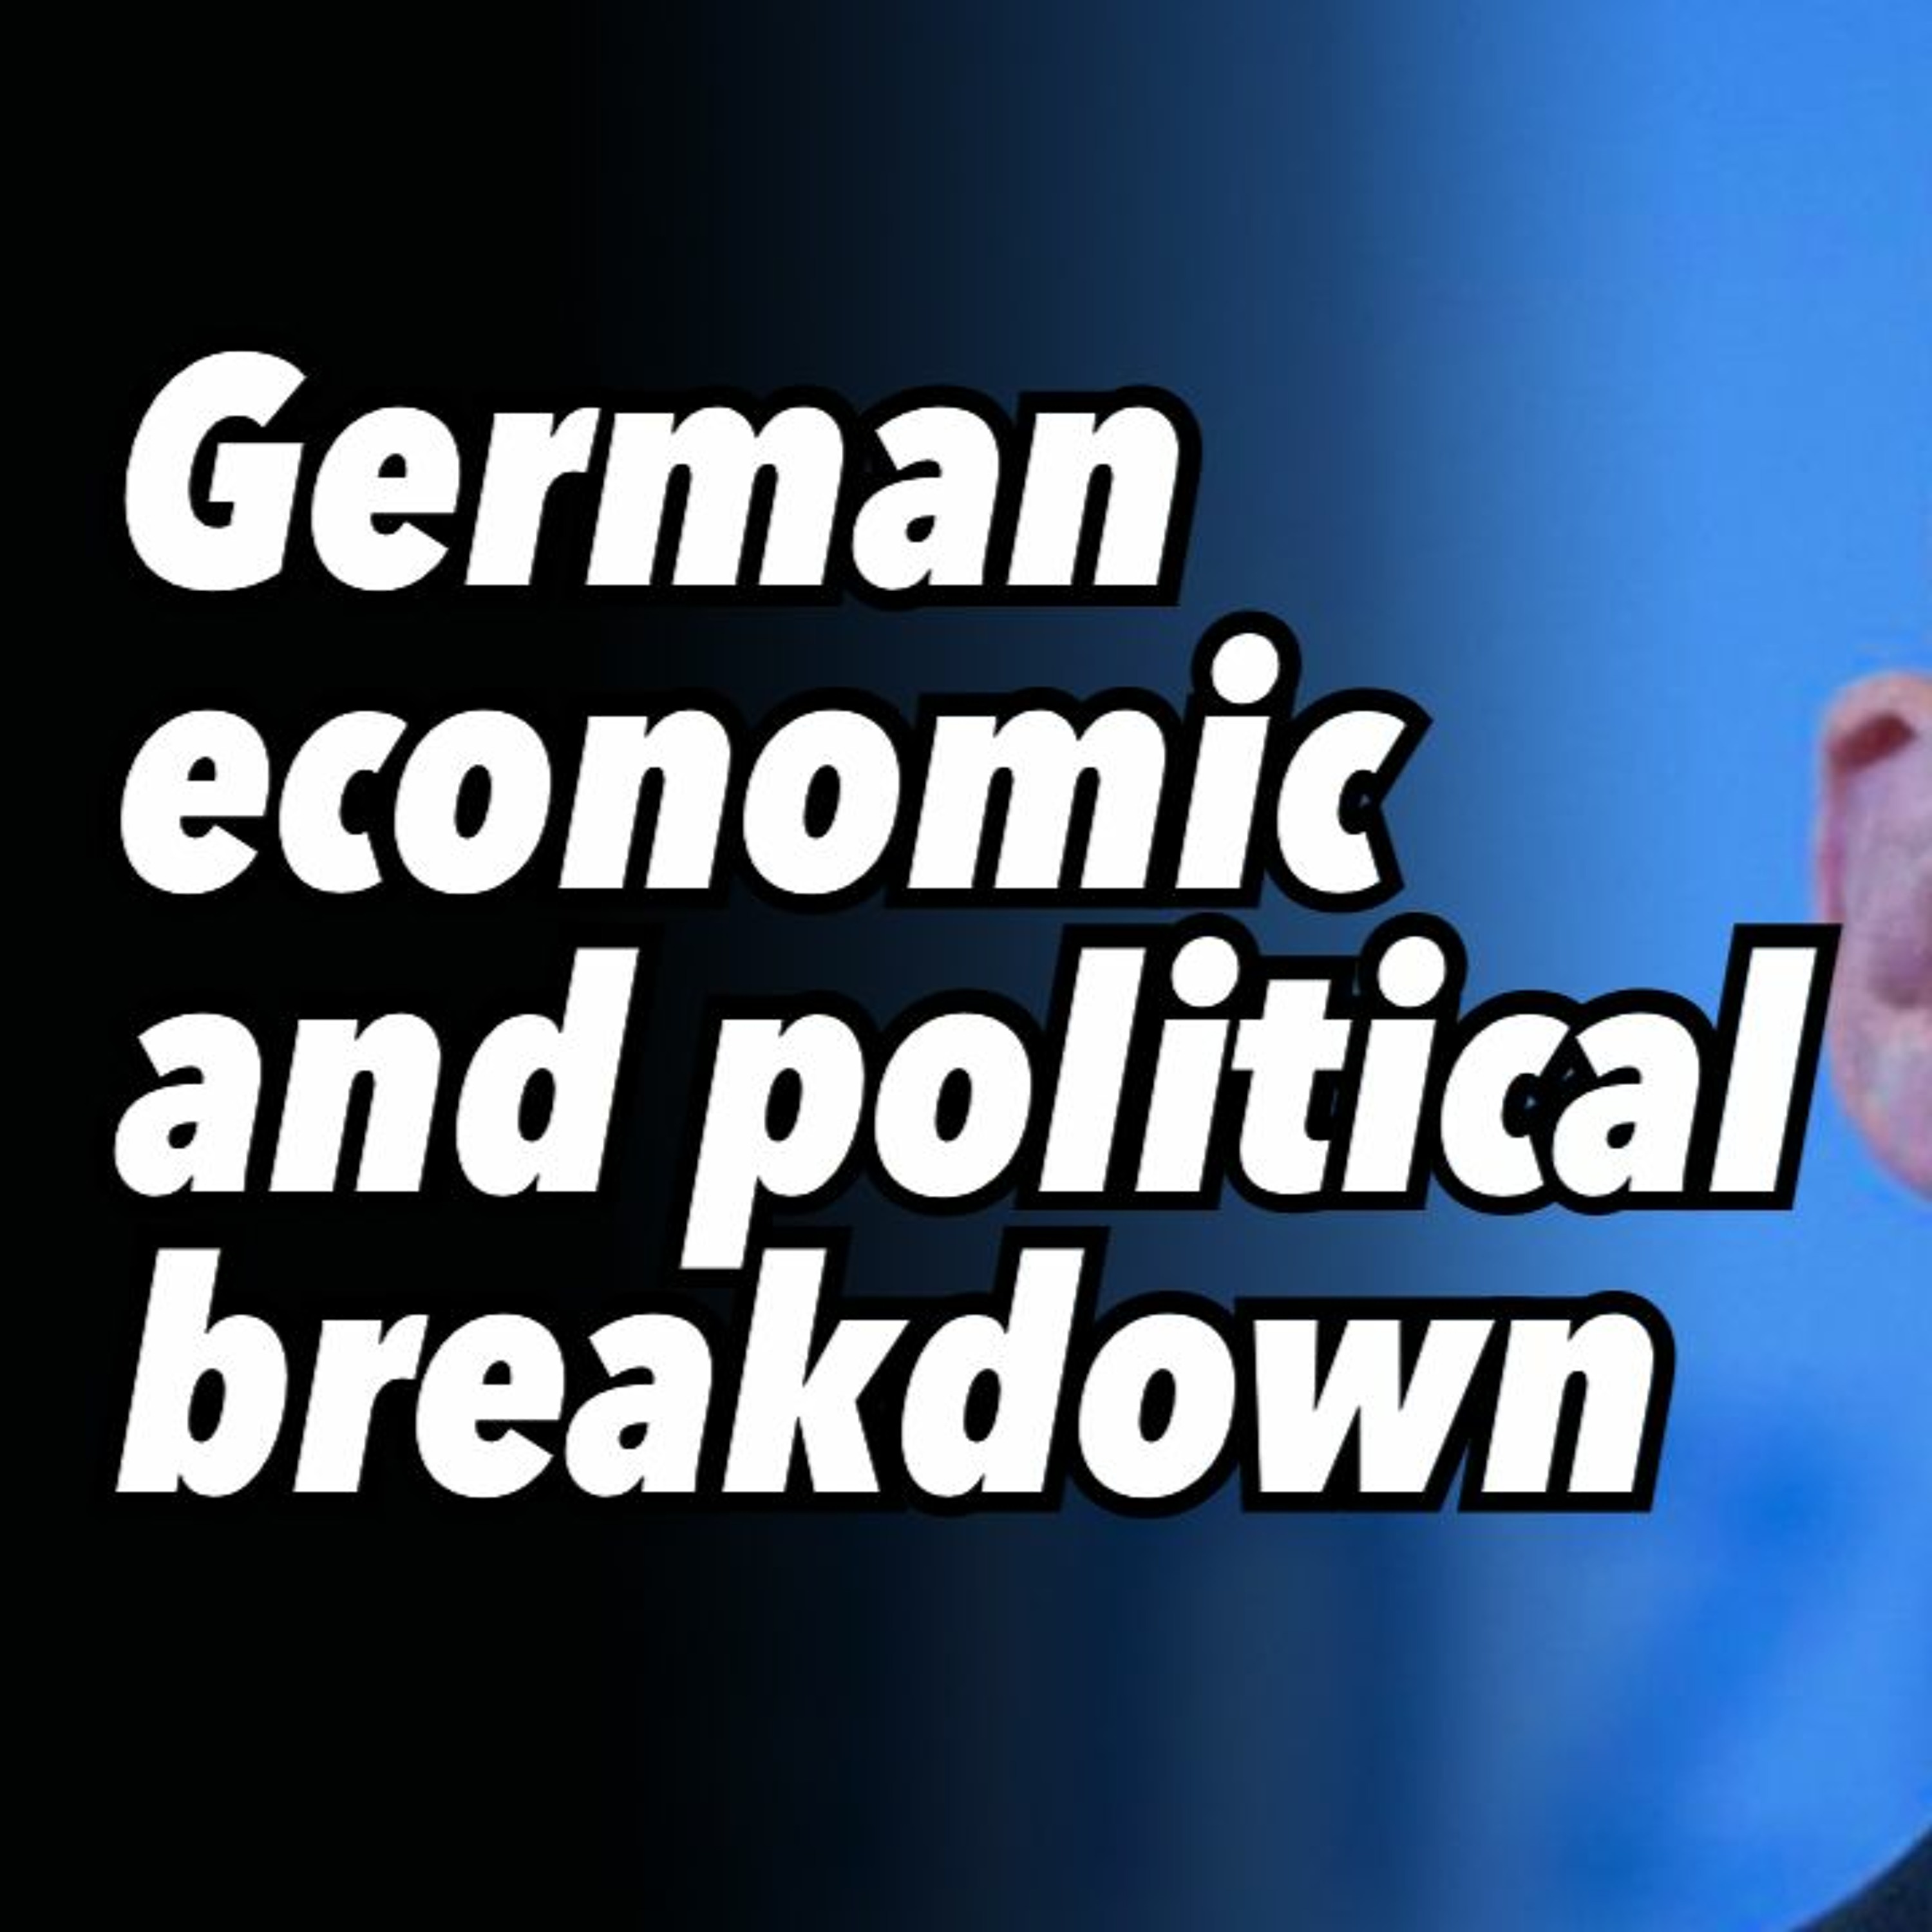 German economic and political breakdown